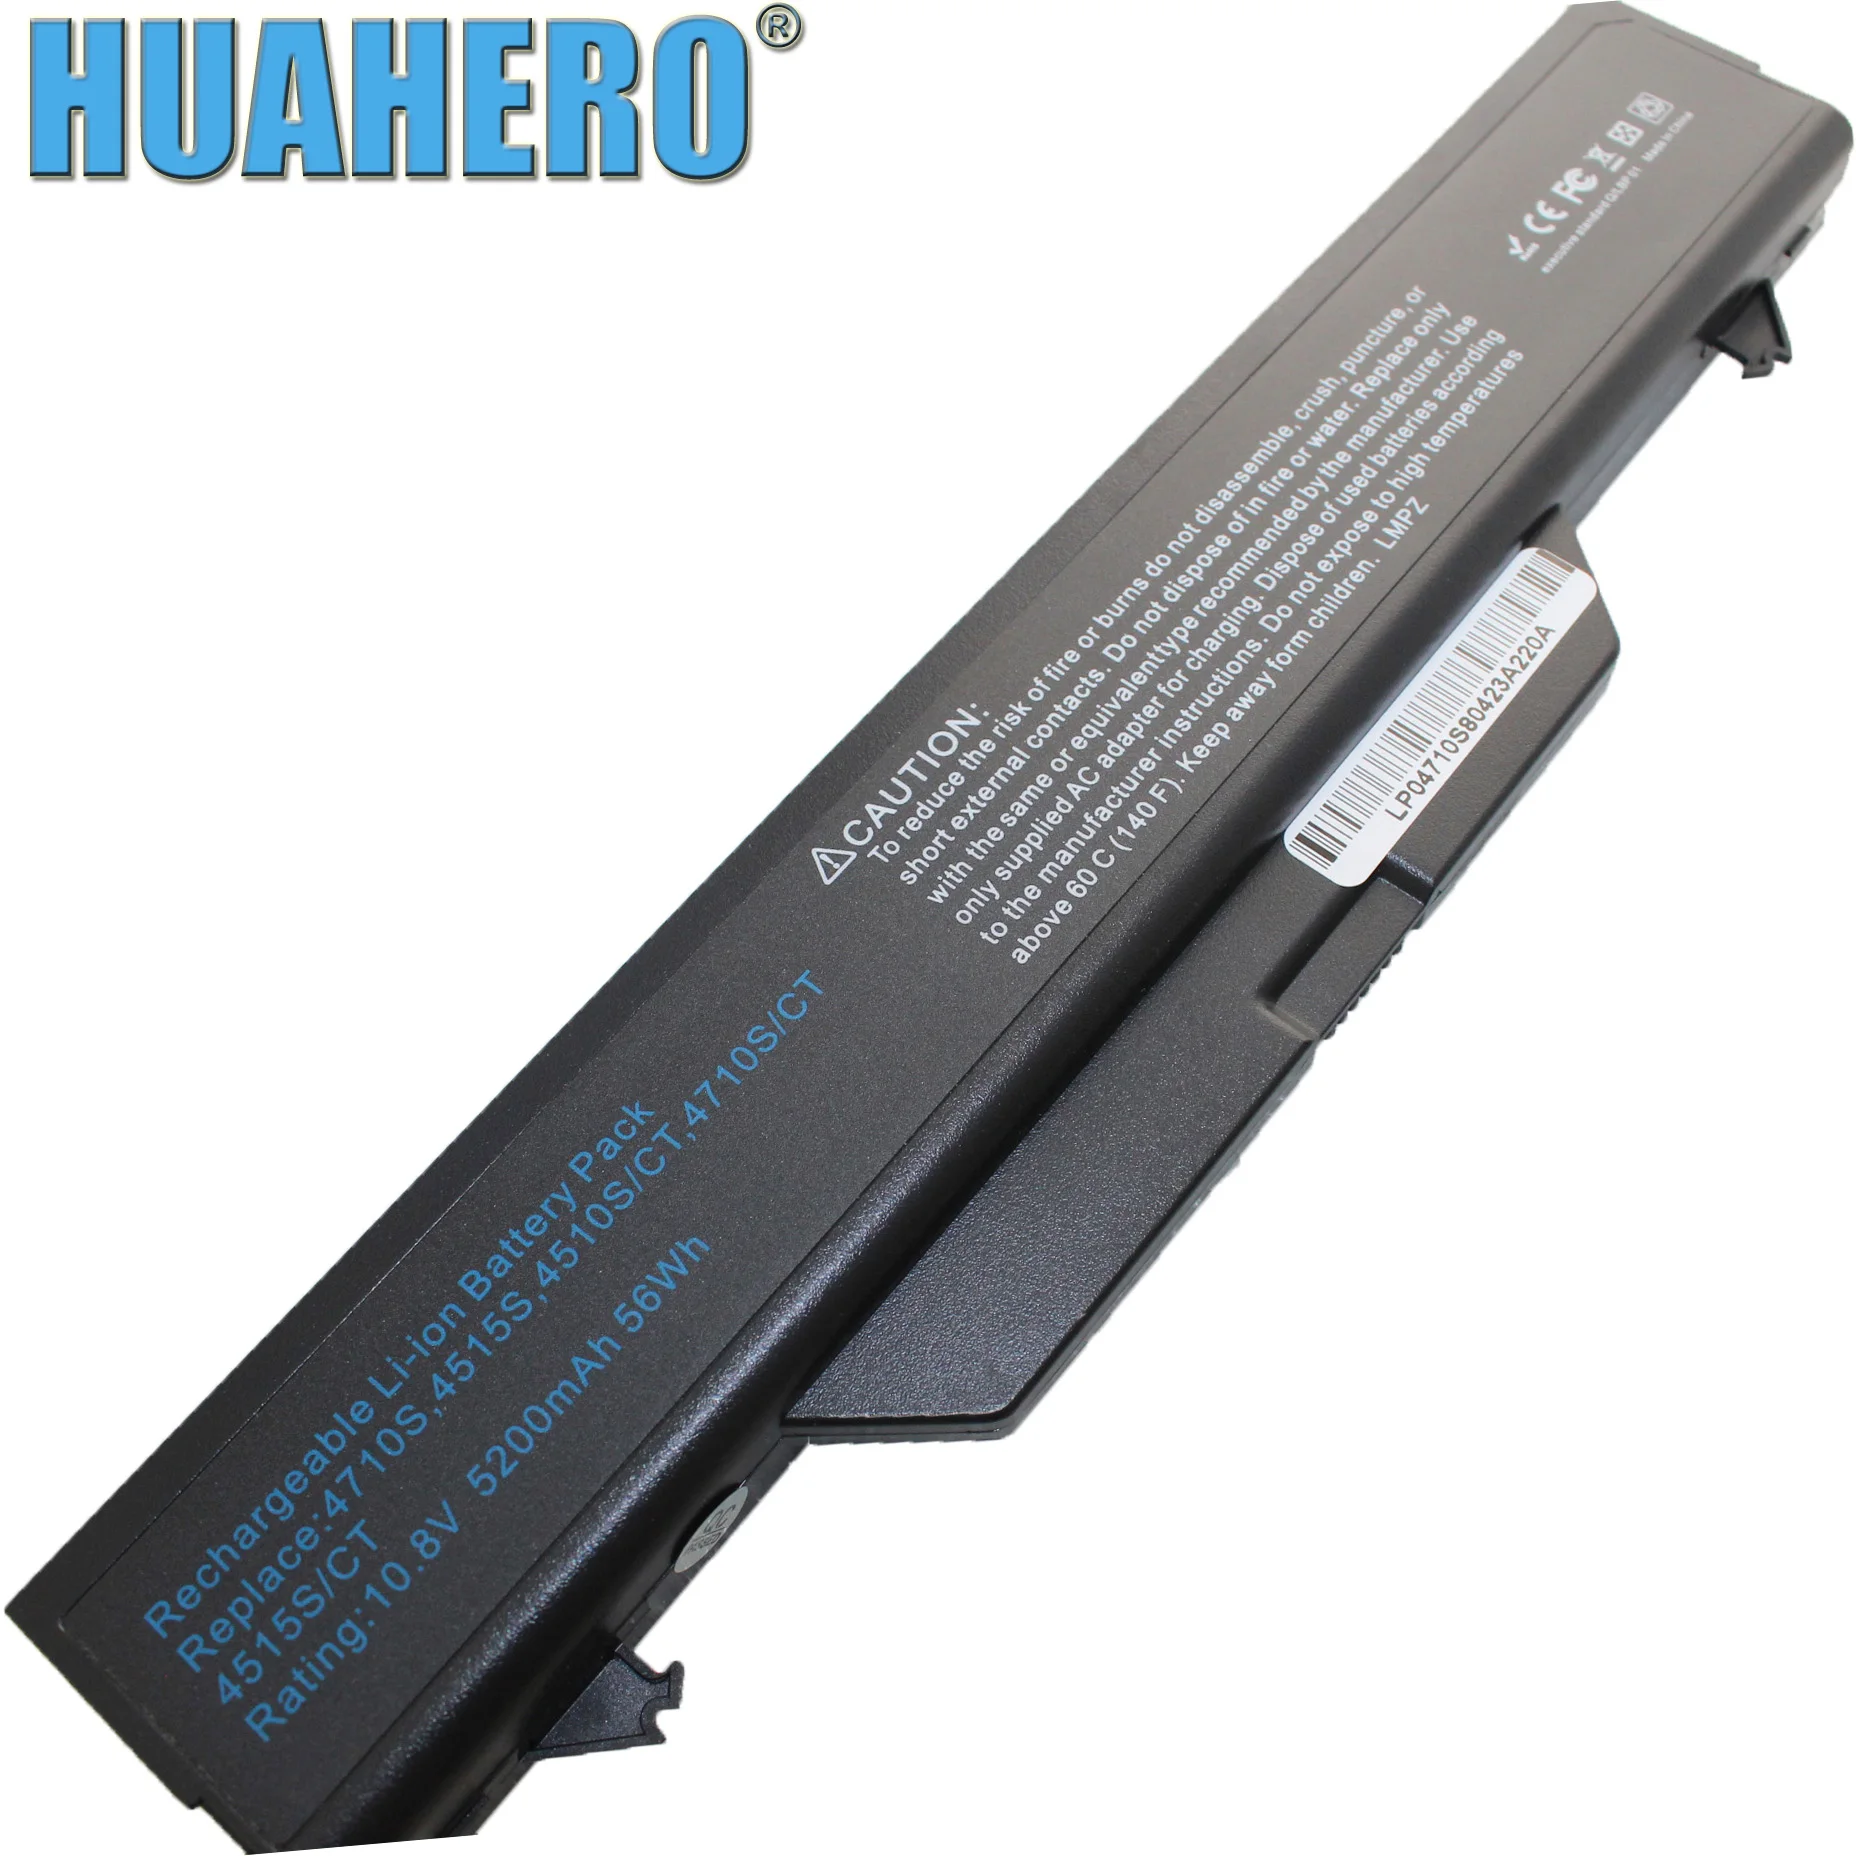 

HUAHERO Battery for HP ProBook 4510s 4515s 4710s 4710s CT 4720s HSTNN OB88 OB89 XB89 513130 321 535808 001 591998 141 593576 001